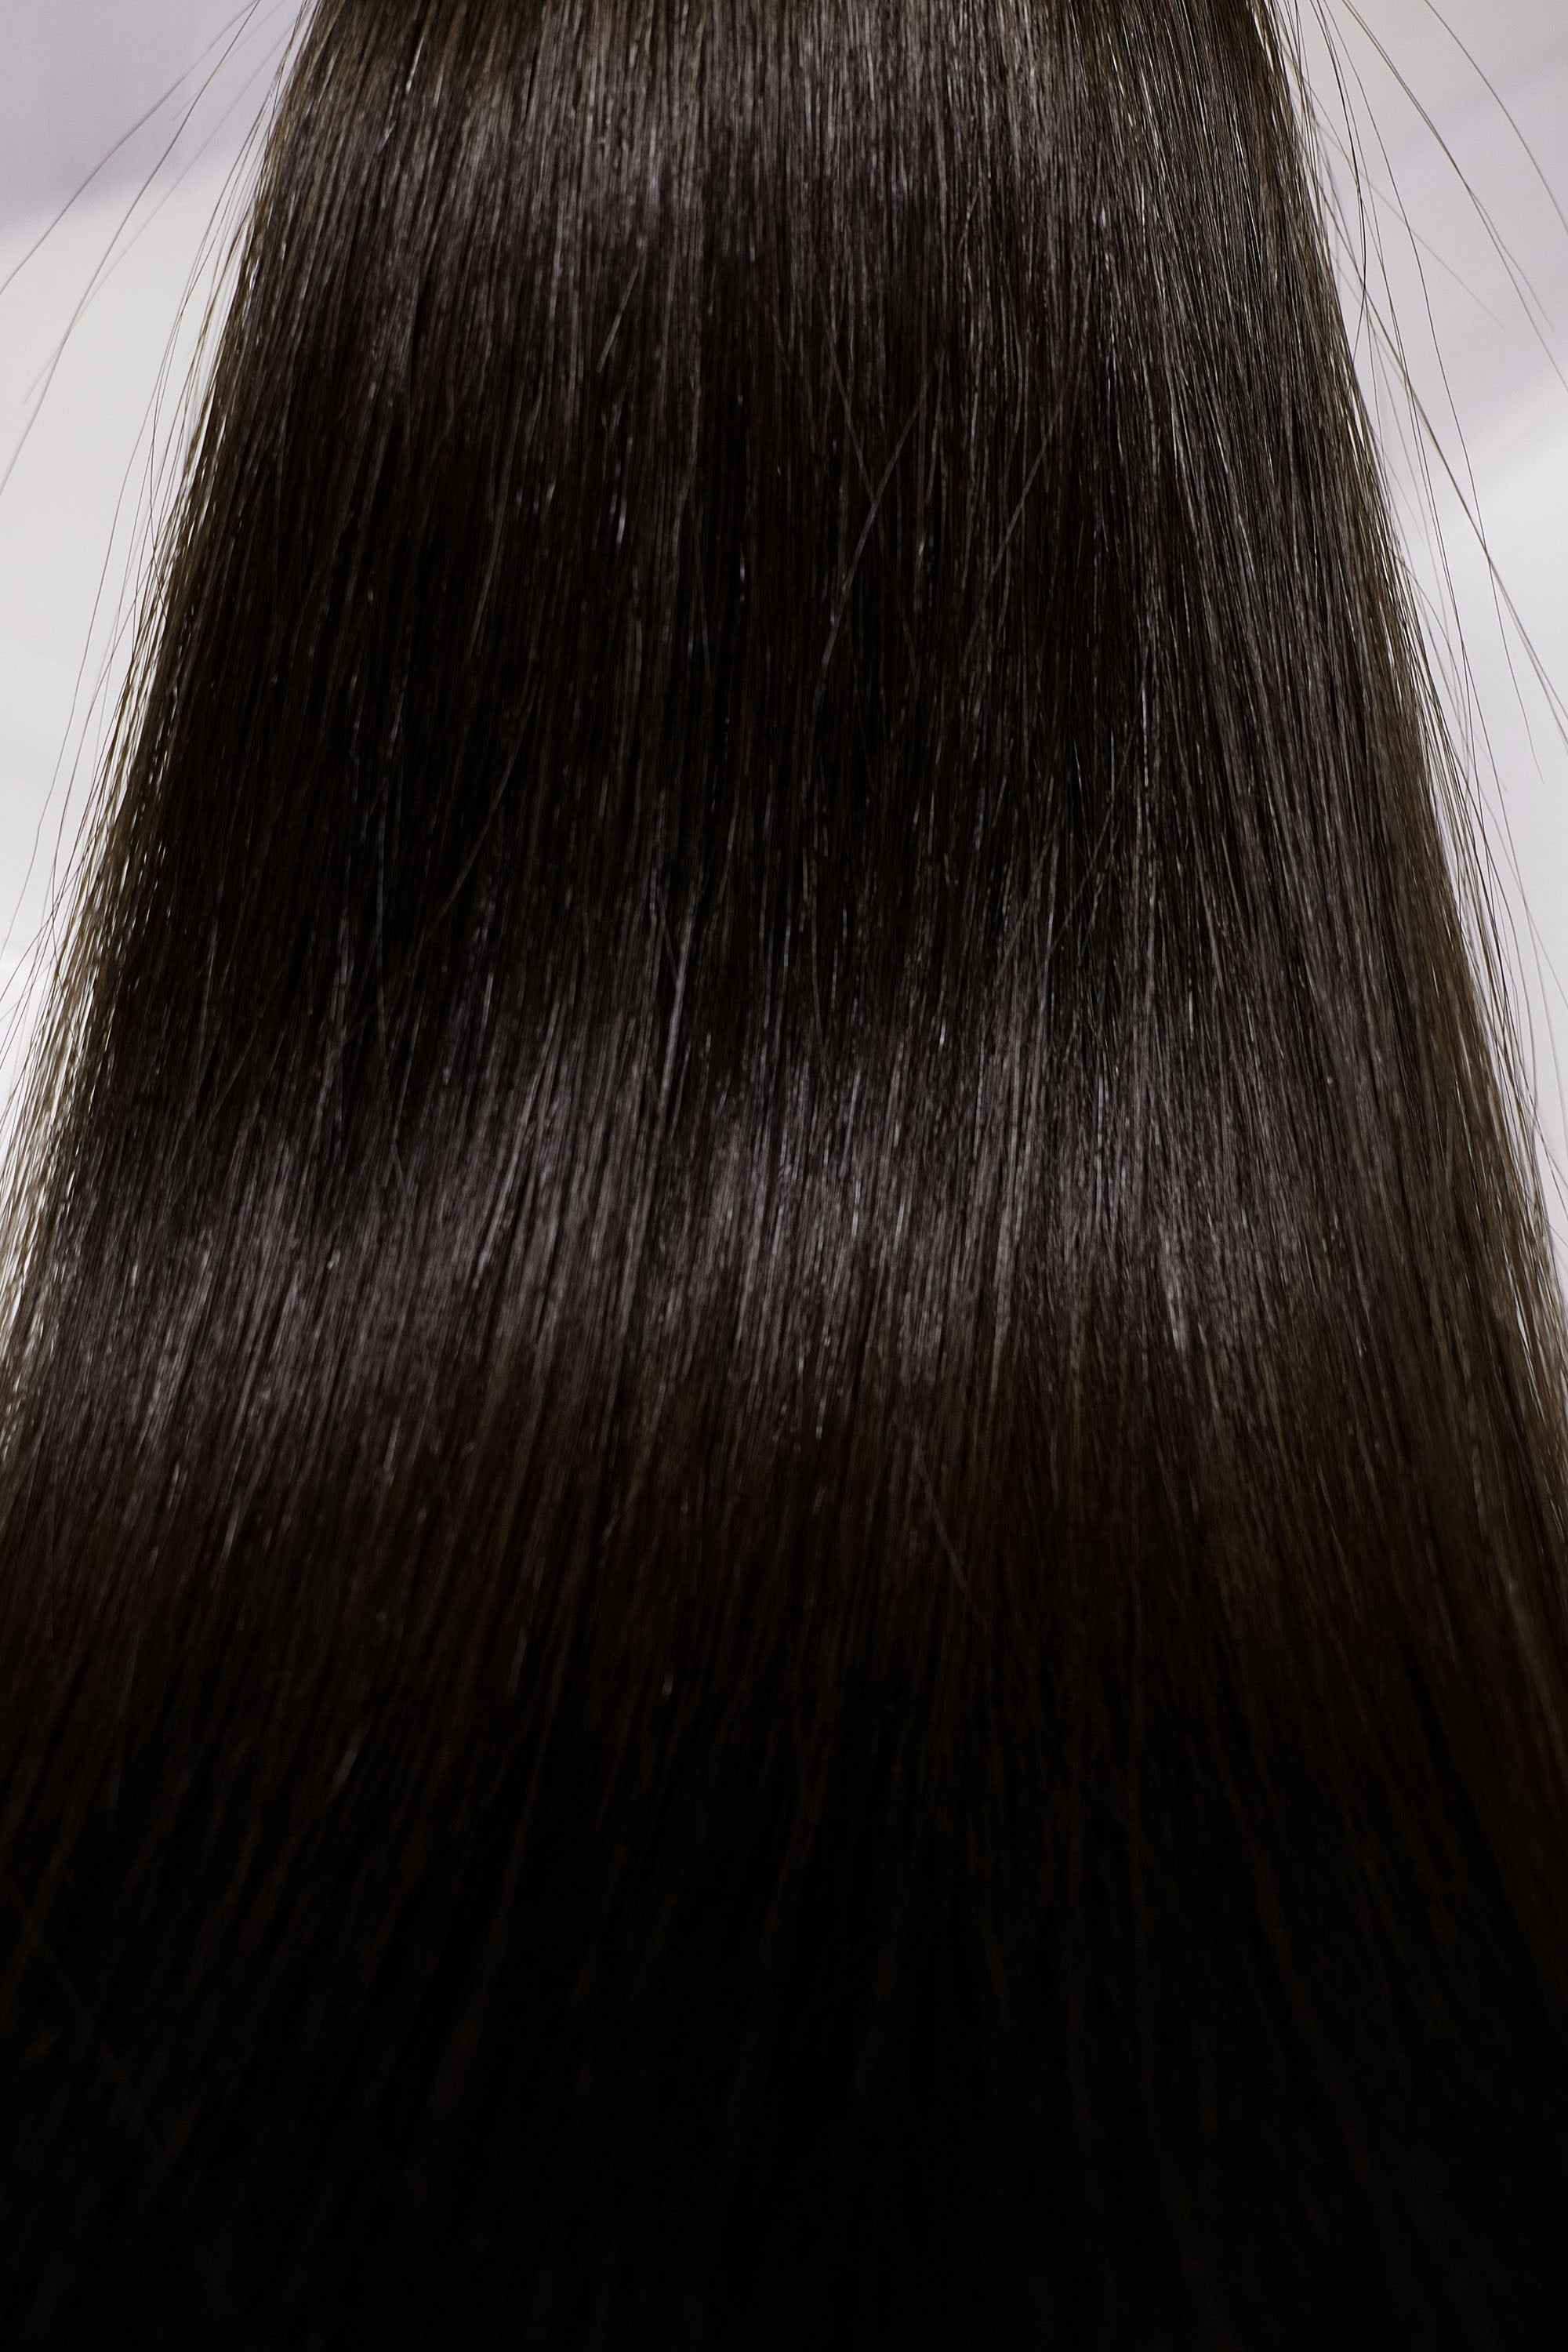 Behair professional Keratin Tip "Premium" 18" (45cm) Natural Straight Natural Black #1B- 25g (Micro - 0.5g each pcs) hair extensions